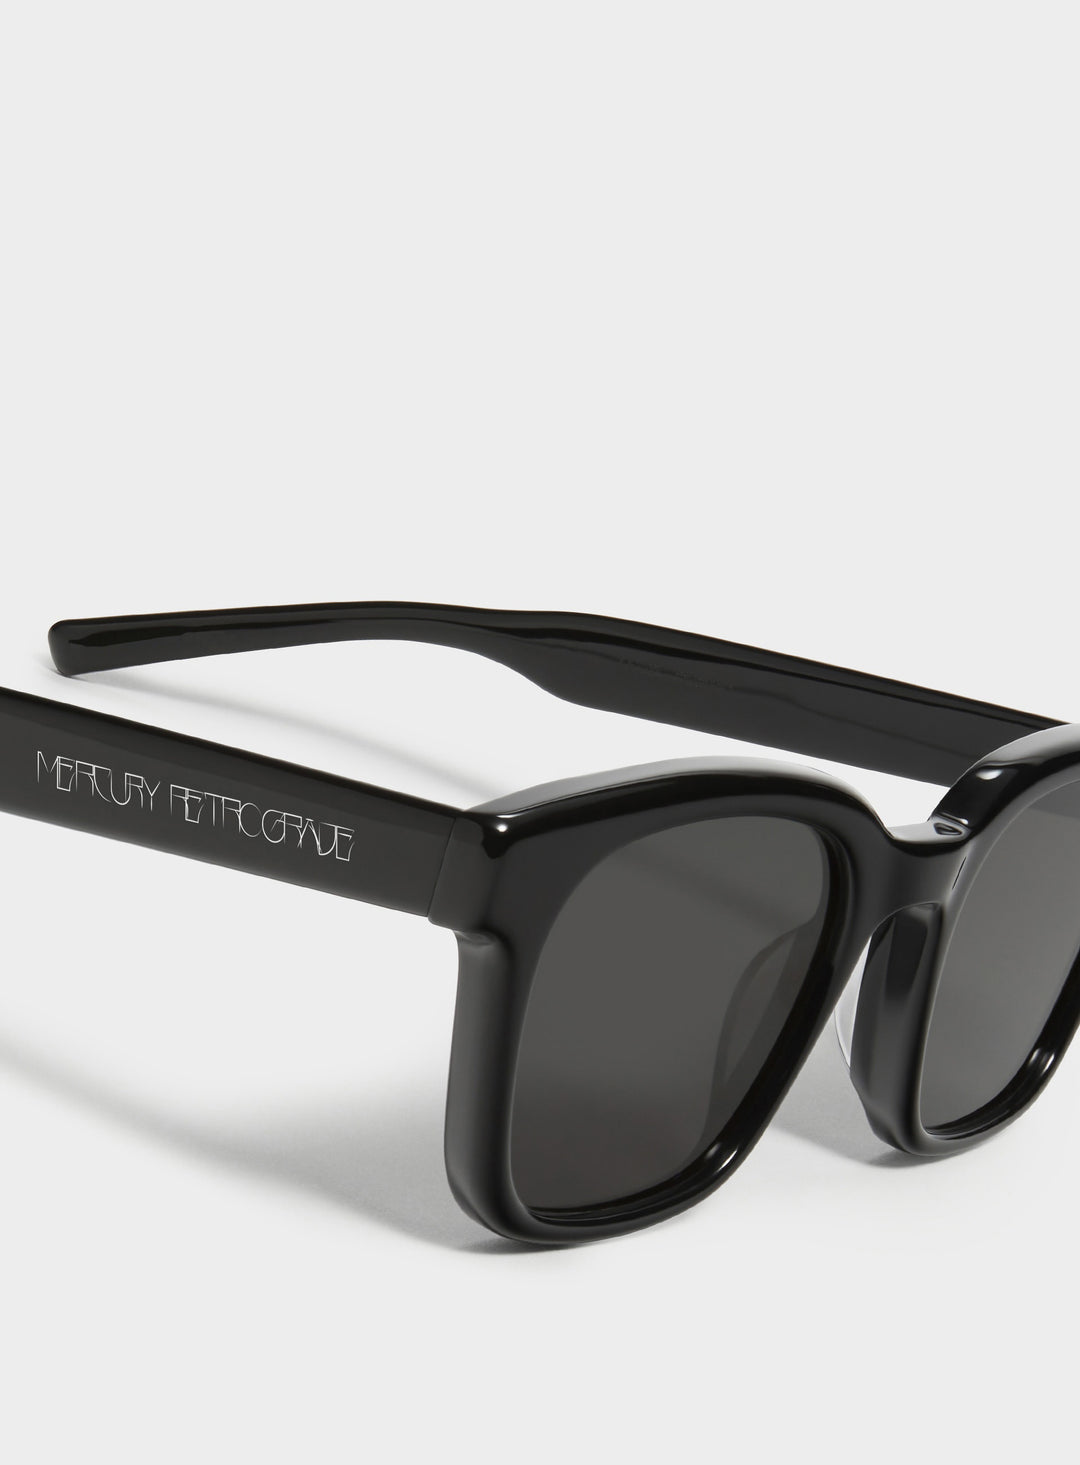 Close-up of Bubblegum in black square Sunglasses lenses, high-quality eyewear by Mercury Retrograde